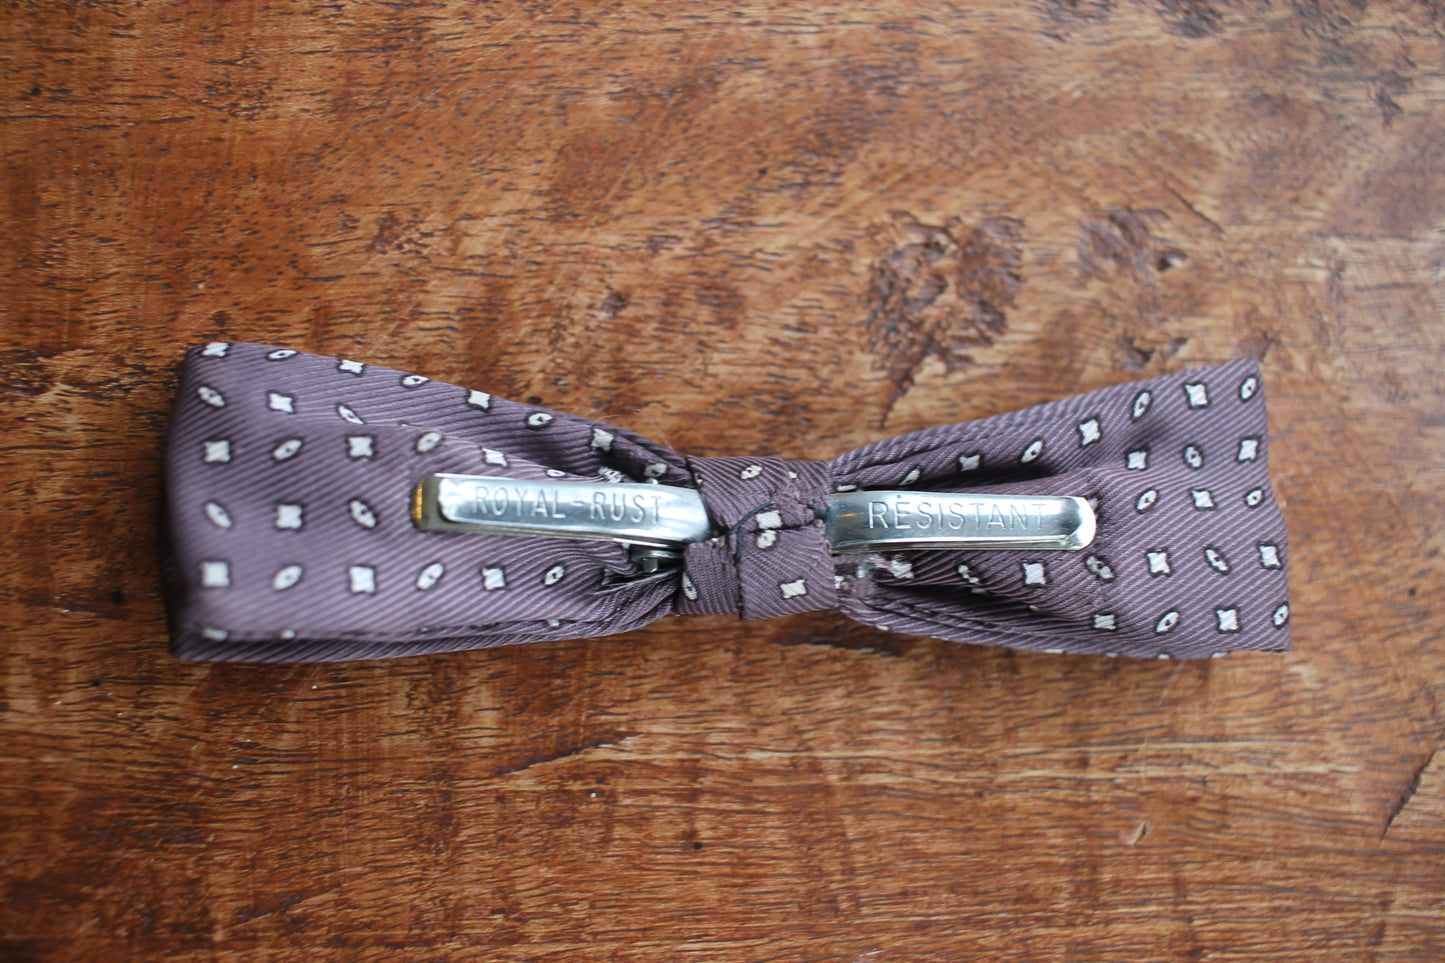 Vintage pre-tied clip on grey purple white spot pattern bow tie